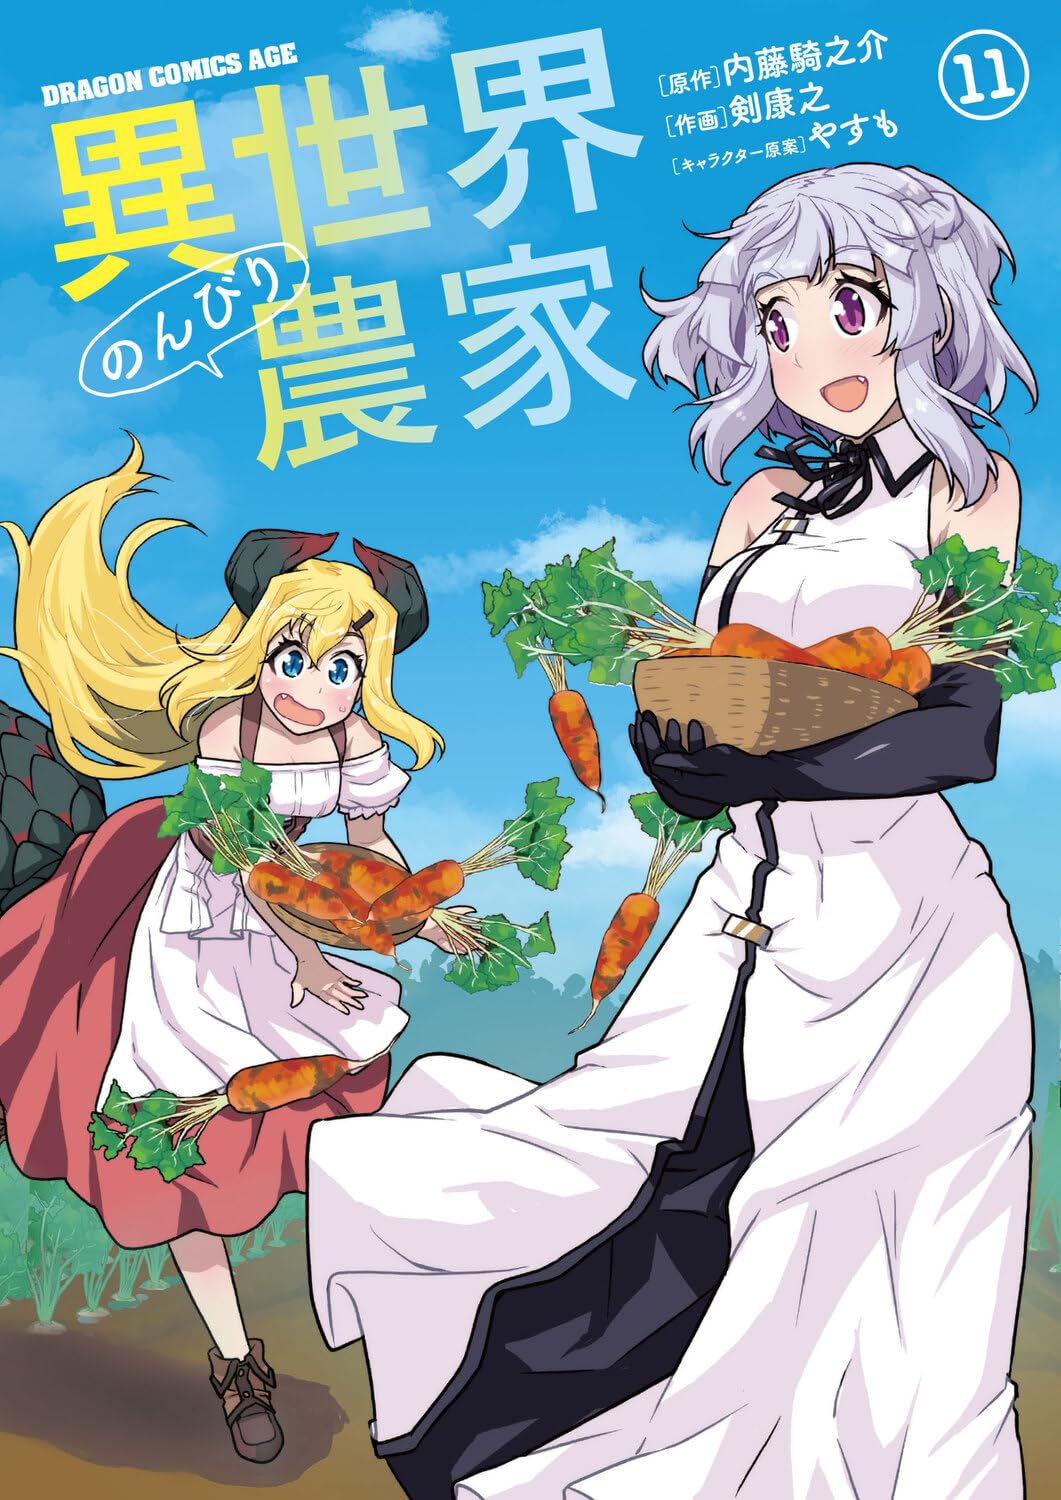 Farming Life in Another World - Isekai Nonbiri Nouka - Anime Firm